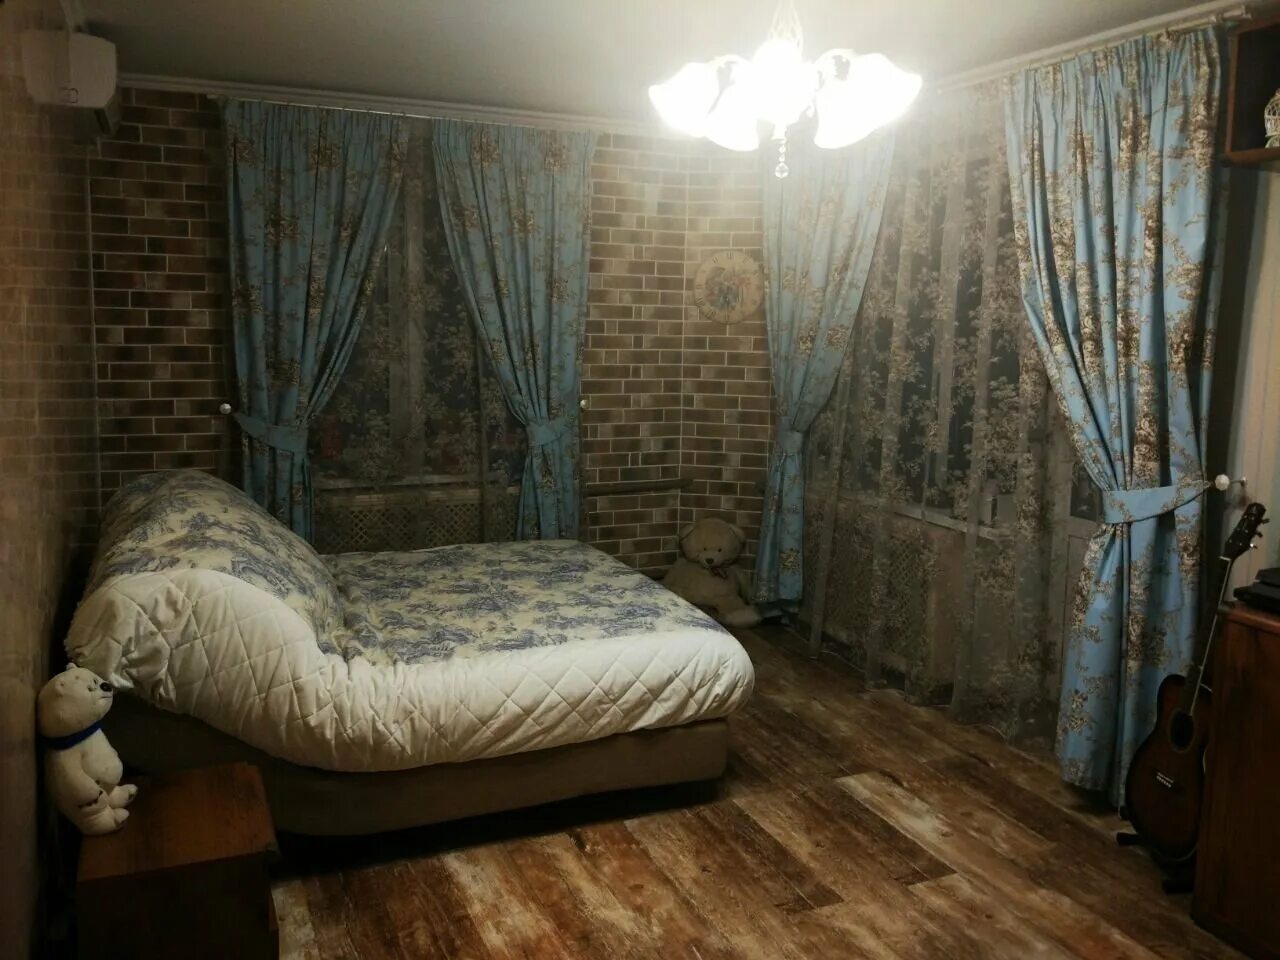 Комната новая 7. Комната в старой квартире. Старая комната в хрущевке. Старая спальня. Старая спальня в хрущевке.